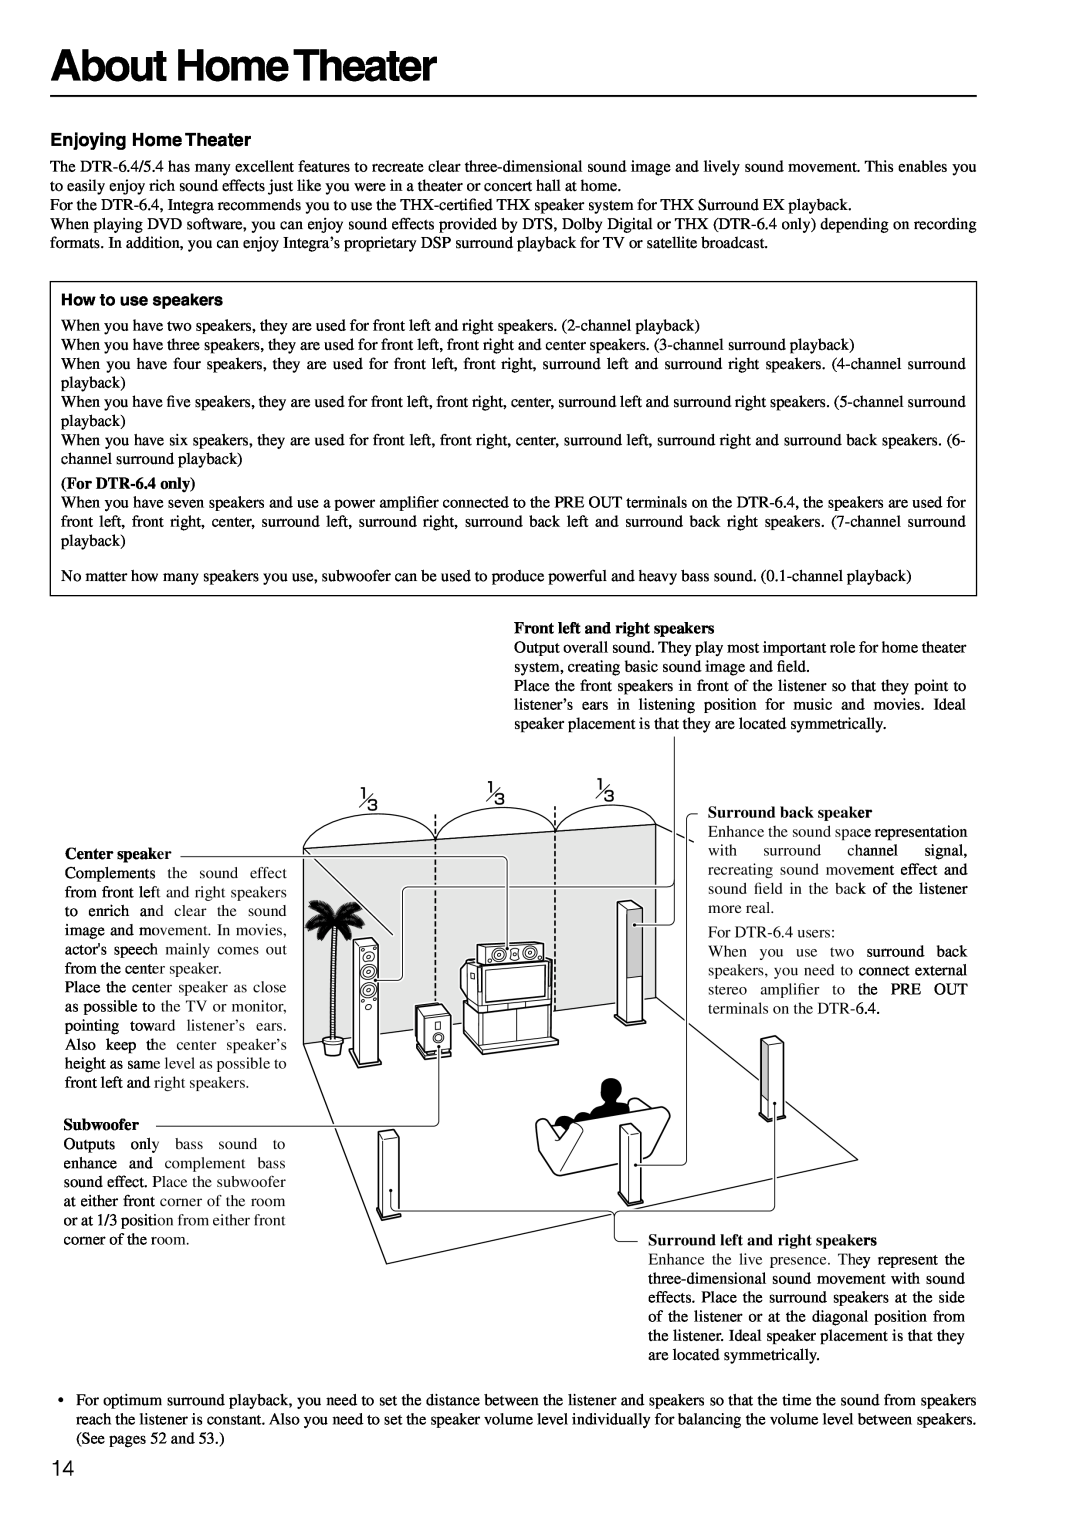 Integra DTR-6.4/5.4 instruction manual About HomeTheater, Enjoying Home Theater, For DTR-6.4only, Center speaker, Subwoofer 